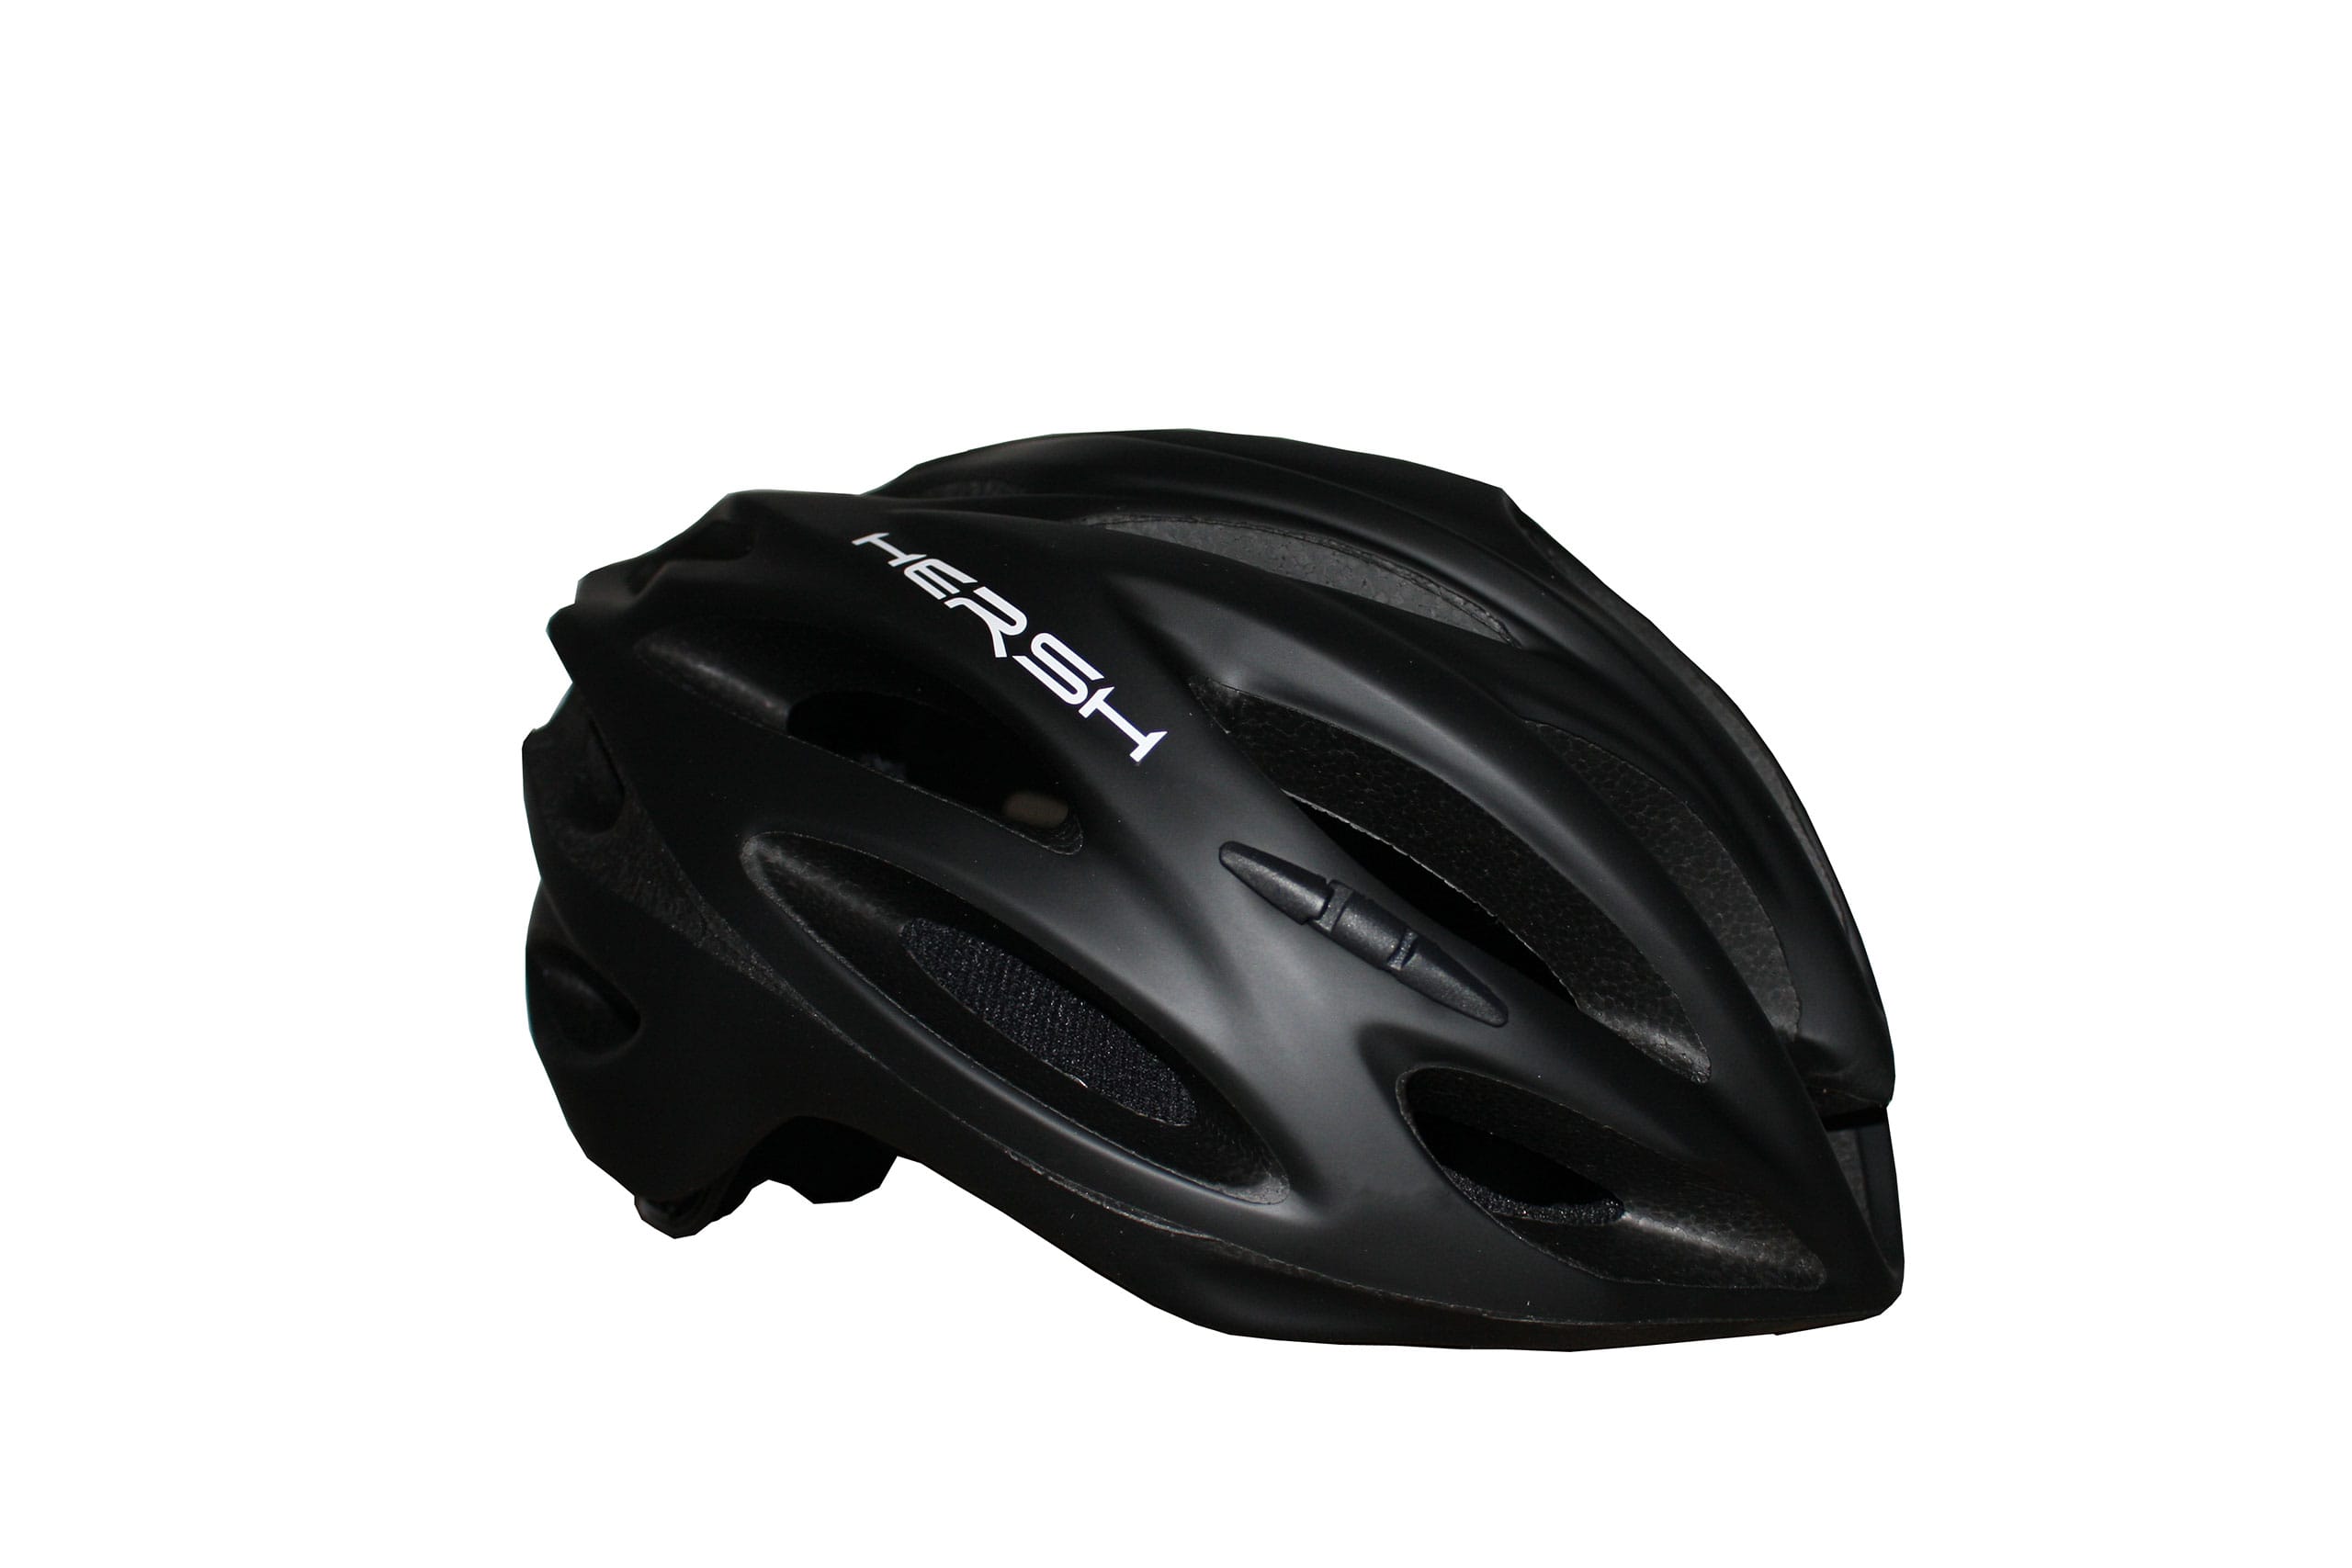 Hersh bike helmet